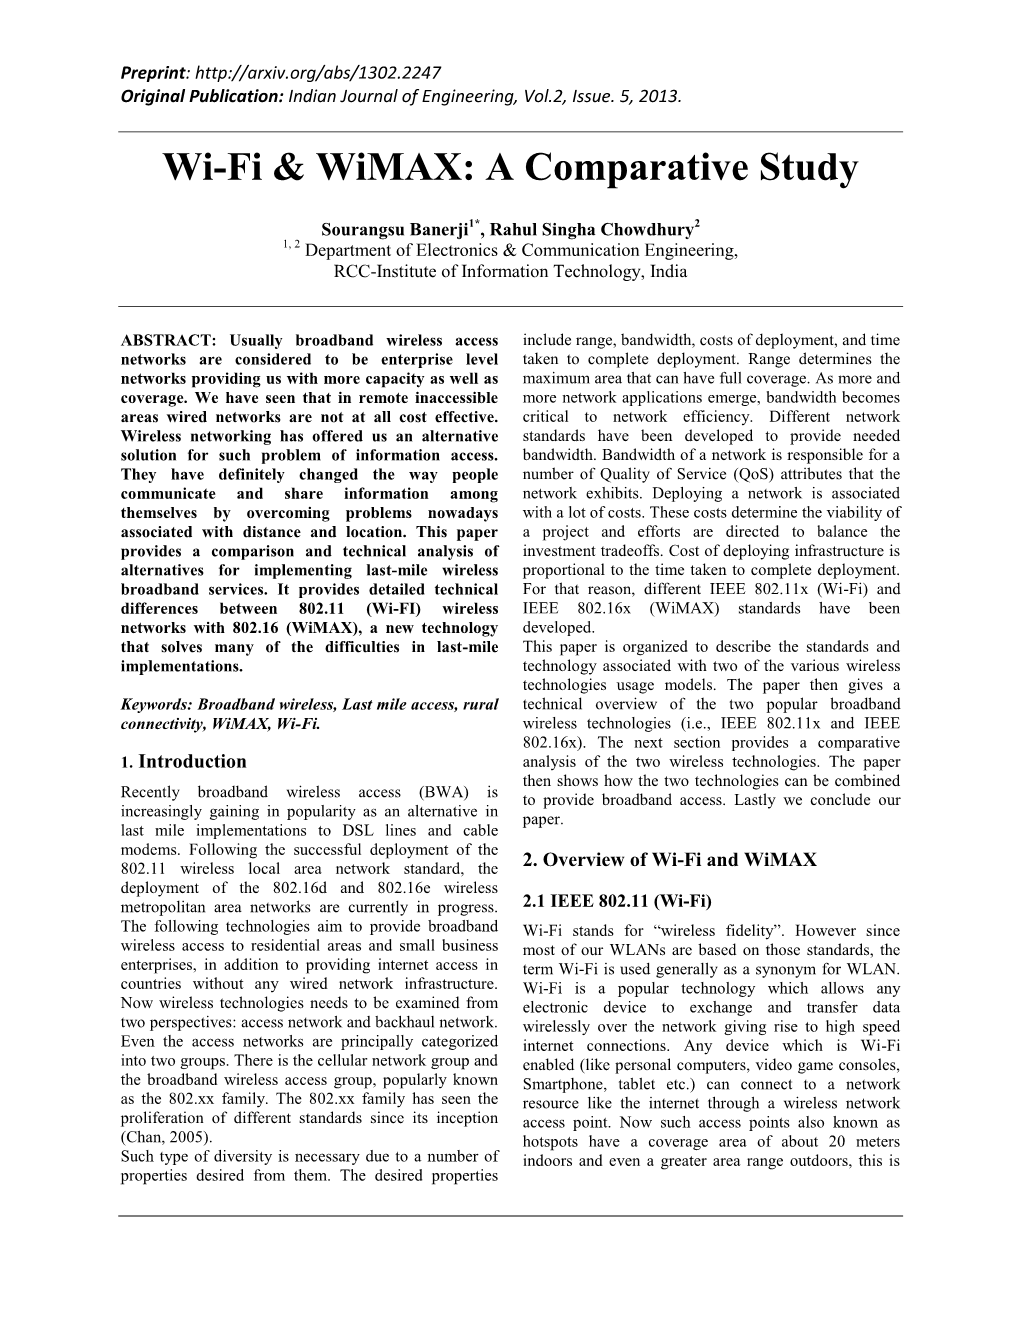 Wi-Fi & Wimax: a Comparative Study